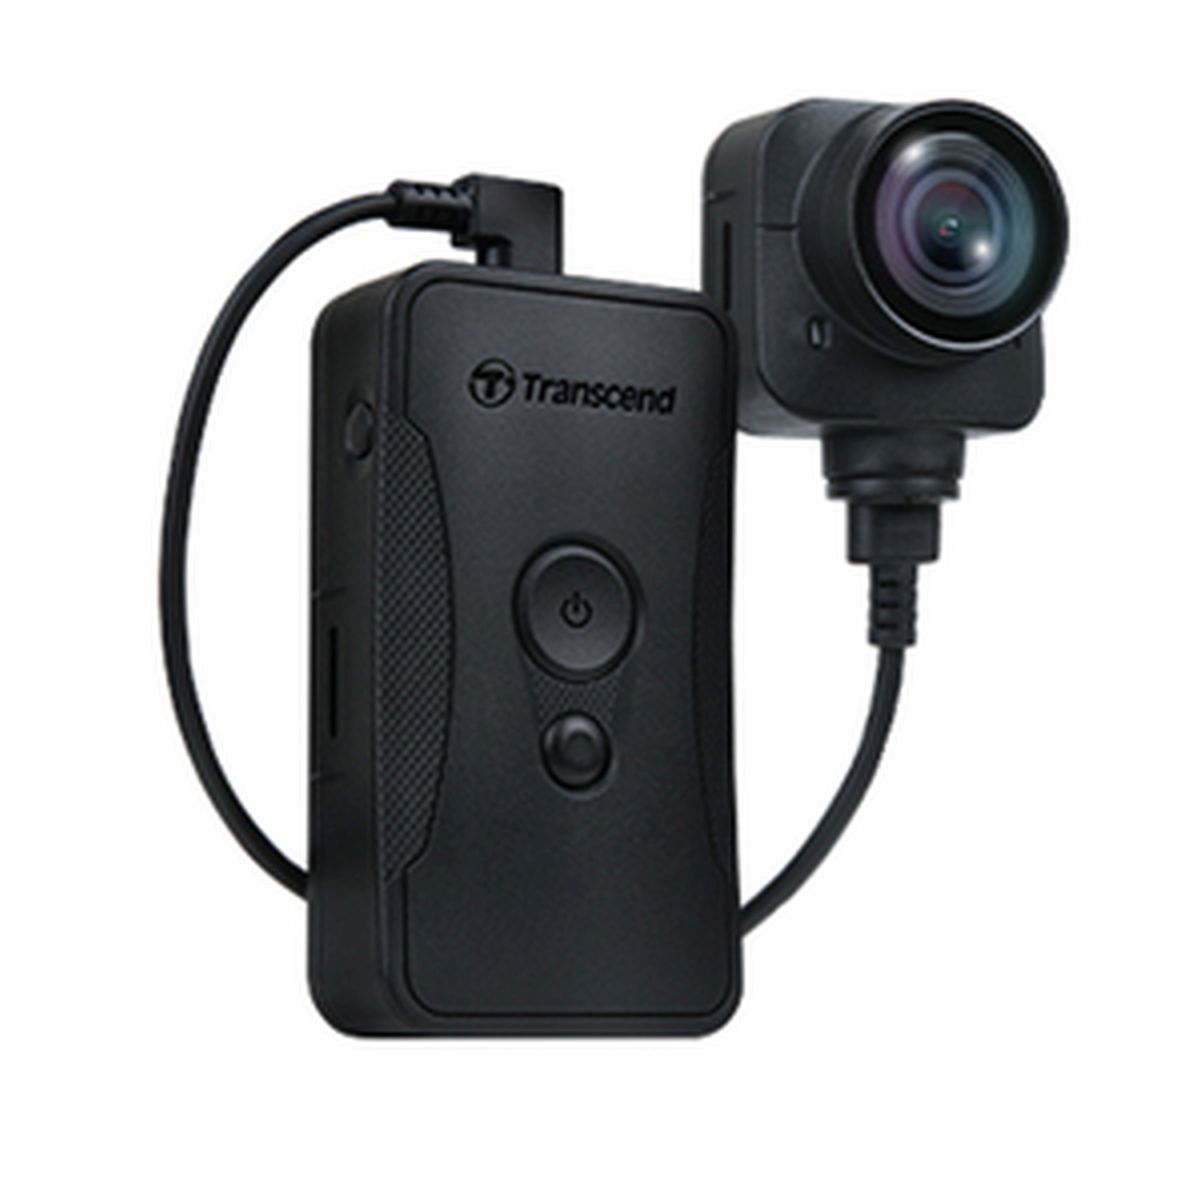 Transcend DrivePro Body 70 64 GB RAM WiFi + Bluetooth, Bodycam